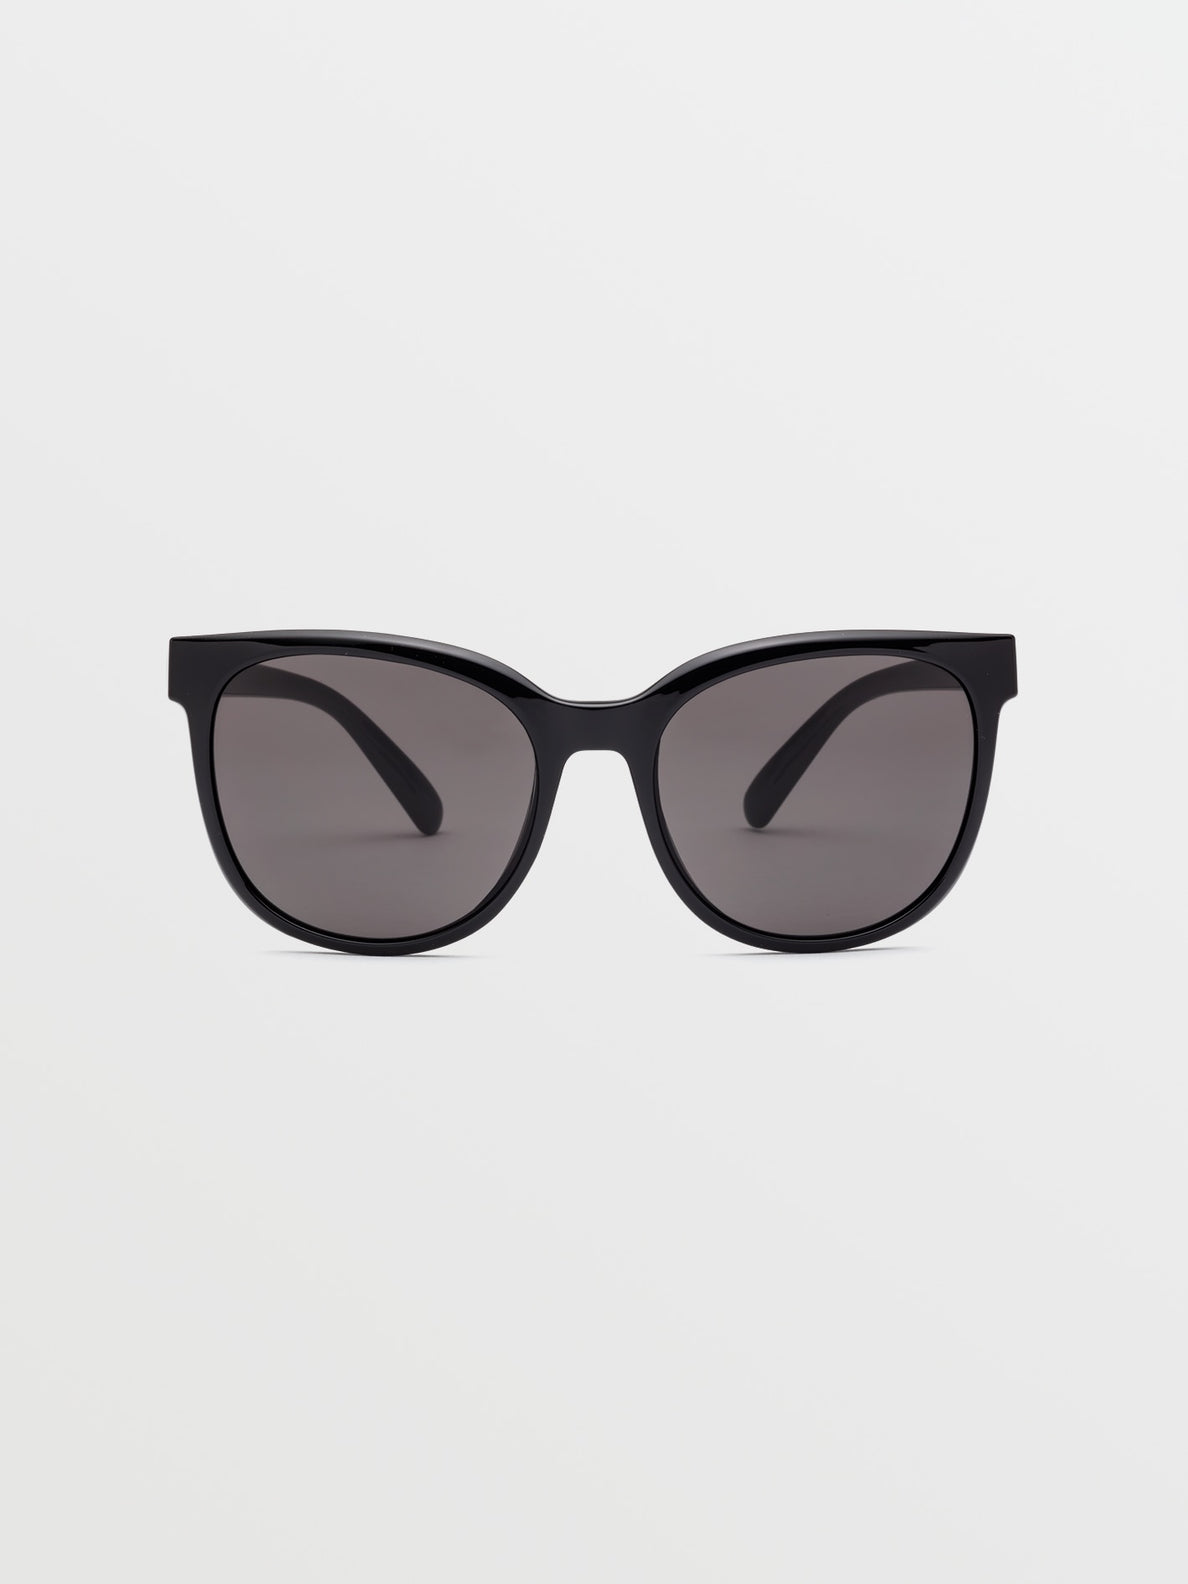 Garden Sunglasses - Gloss Black / Gray